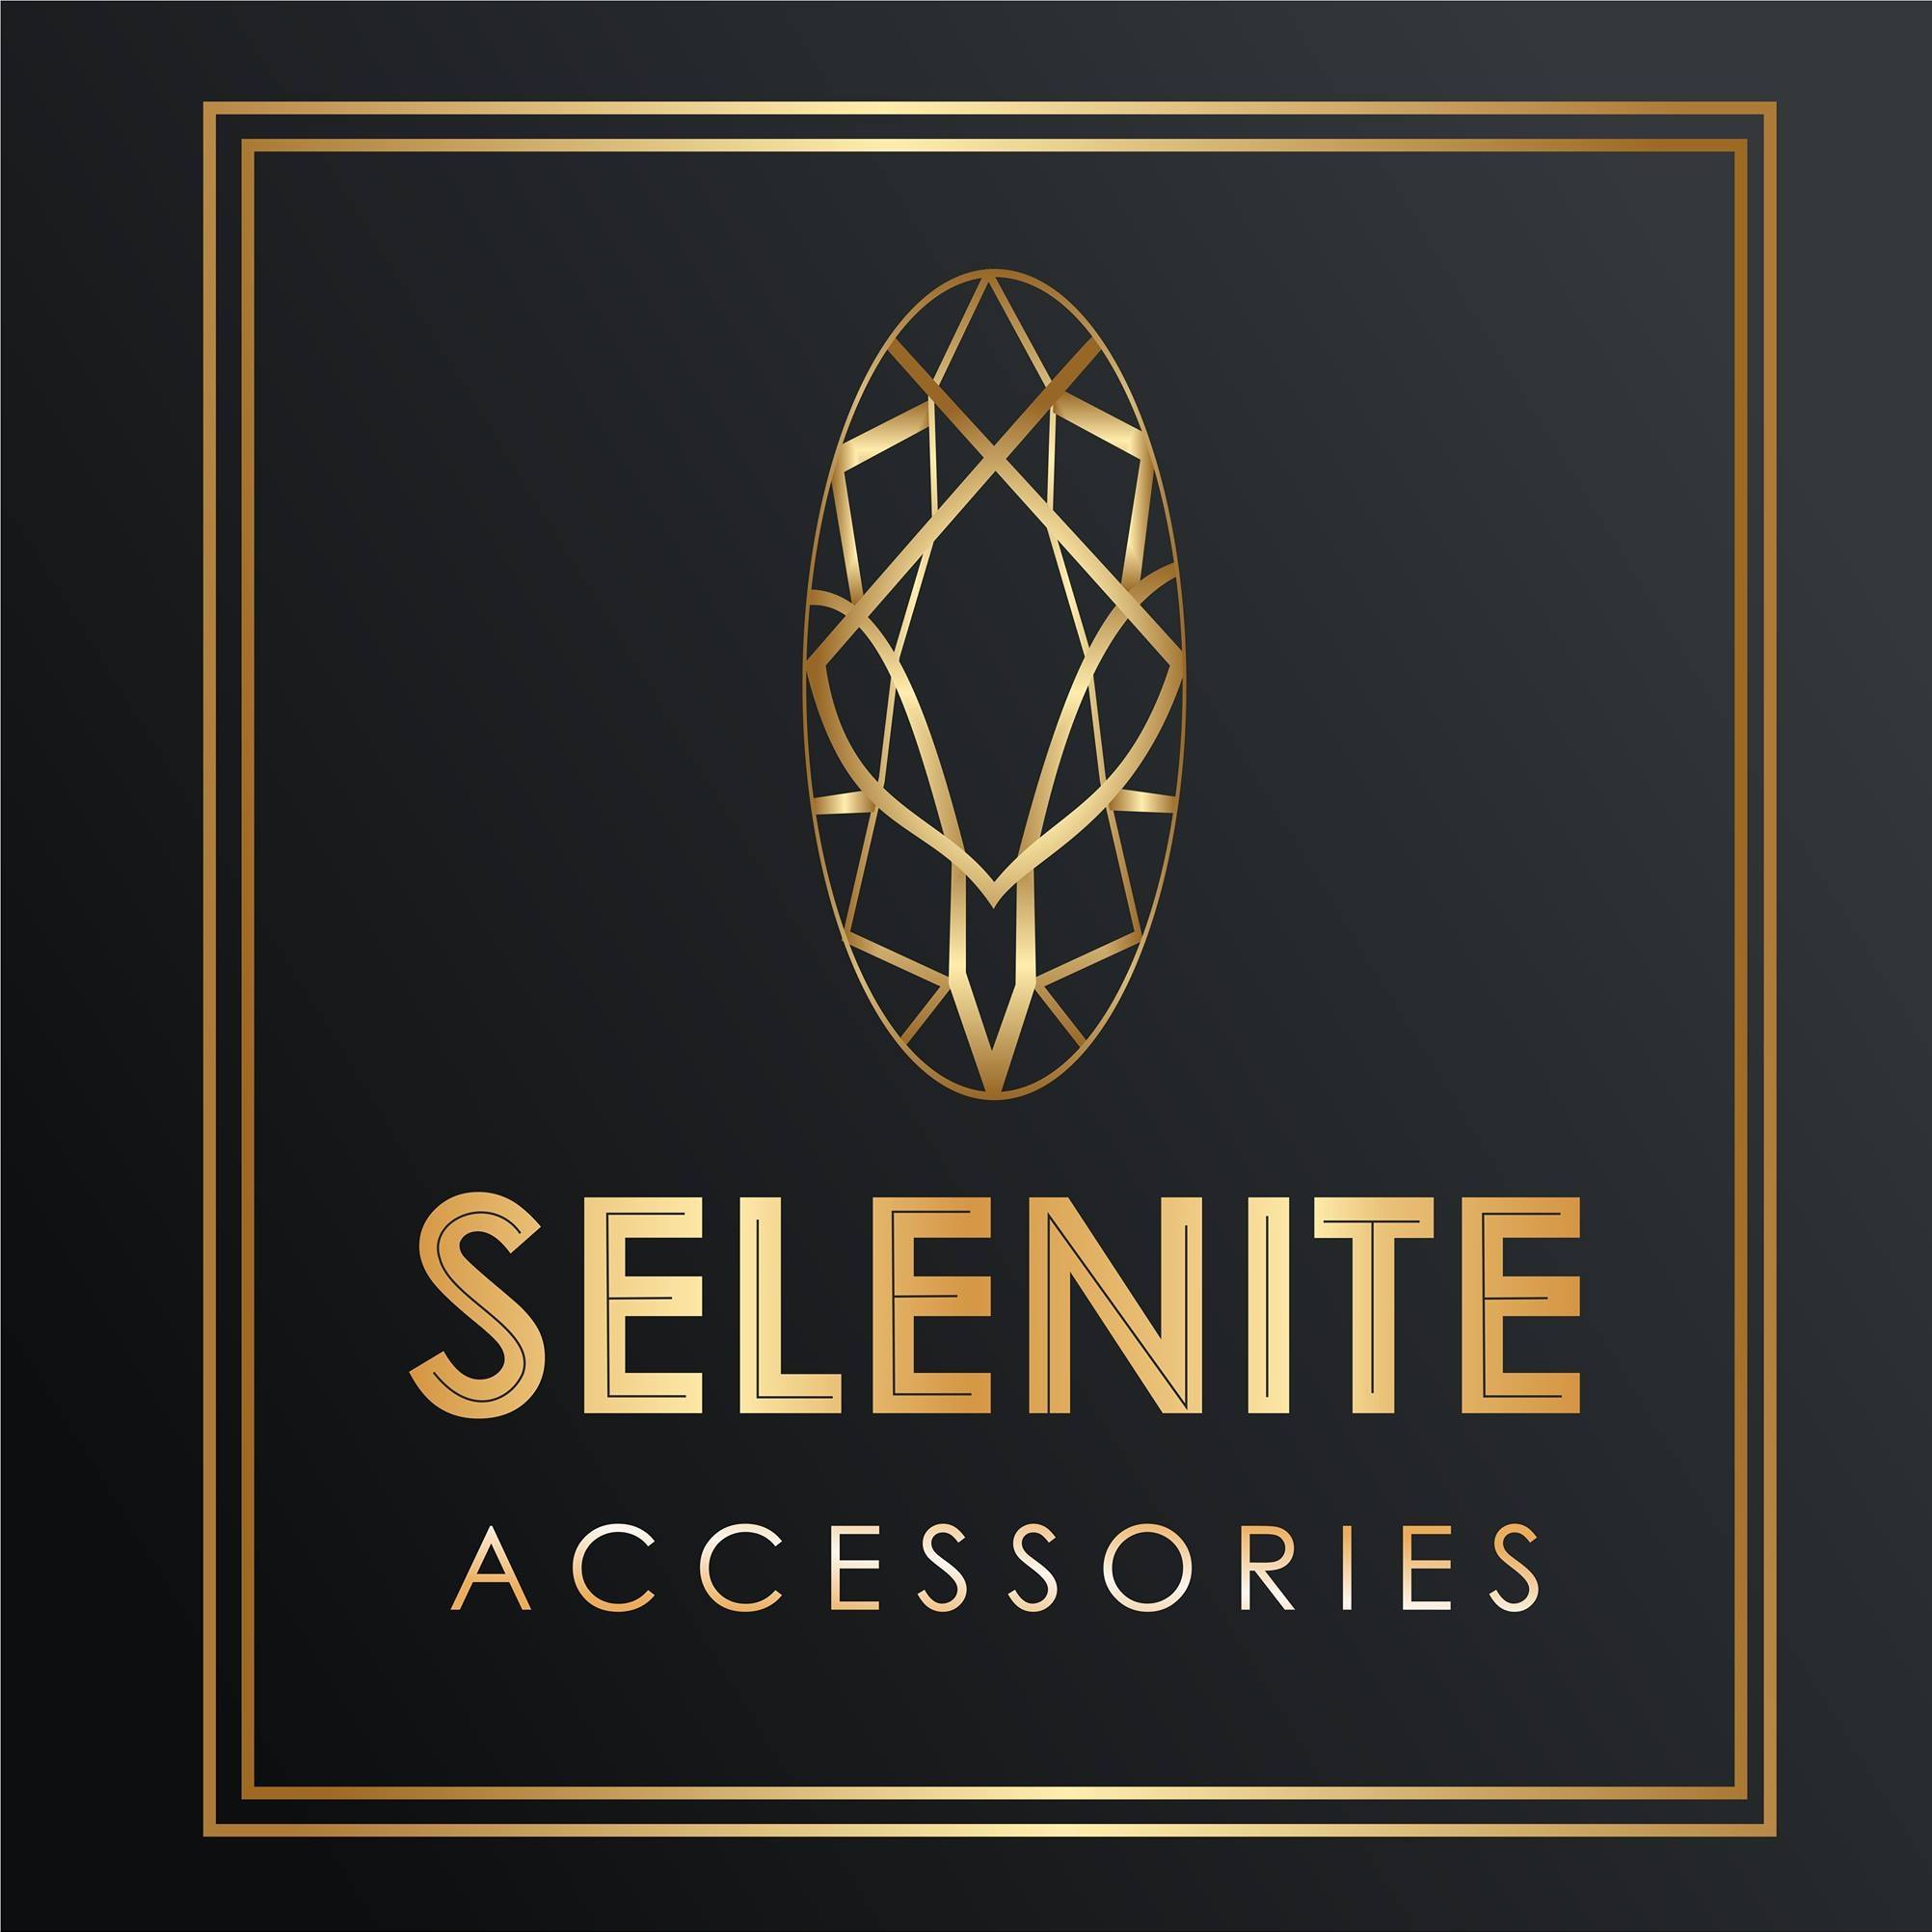 Selenite Accessories